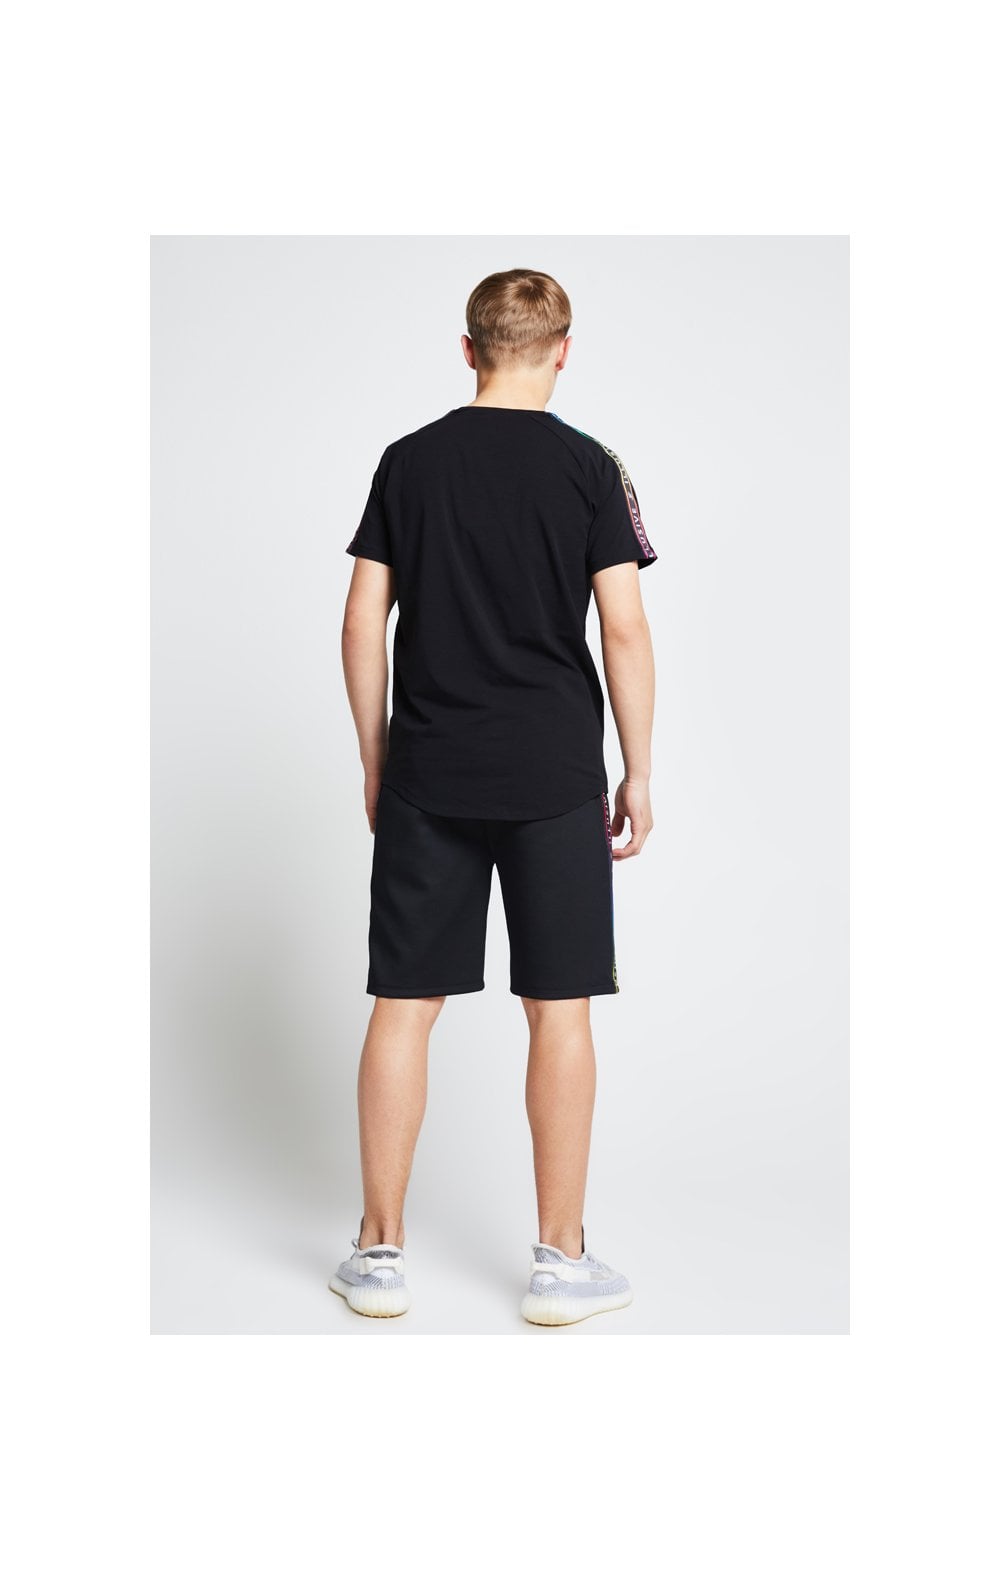 Illusive London Tape Jersey Shorts - Black (6)